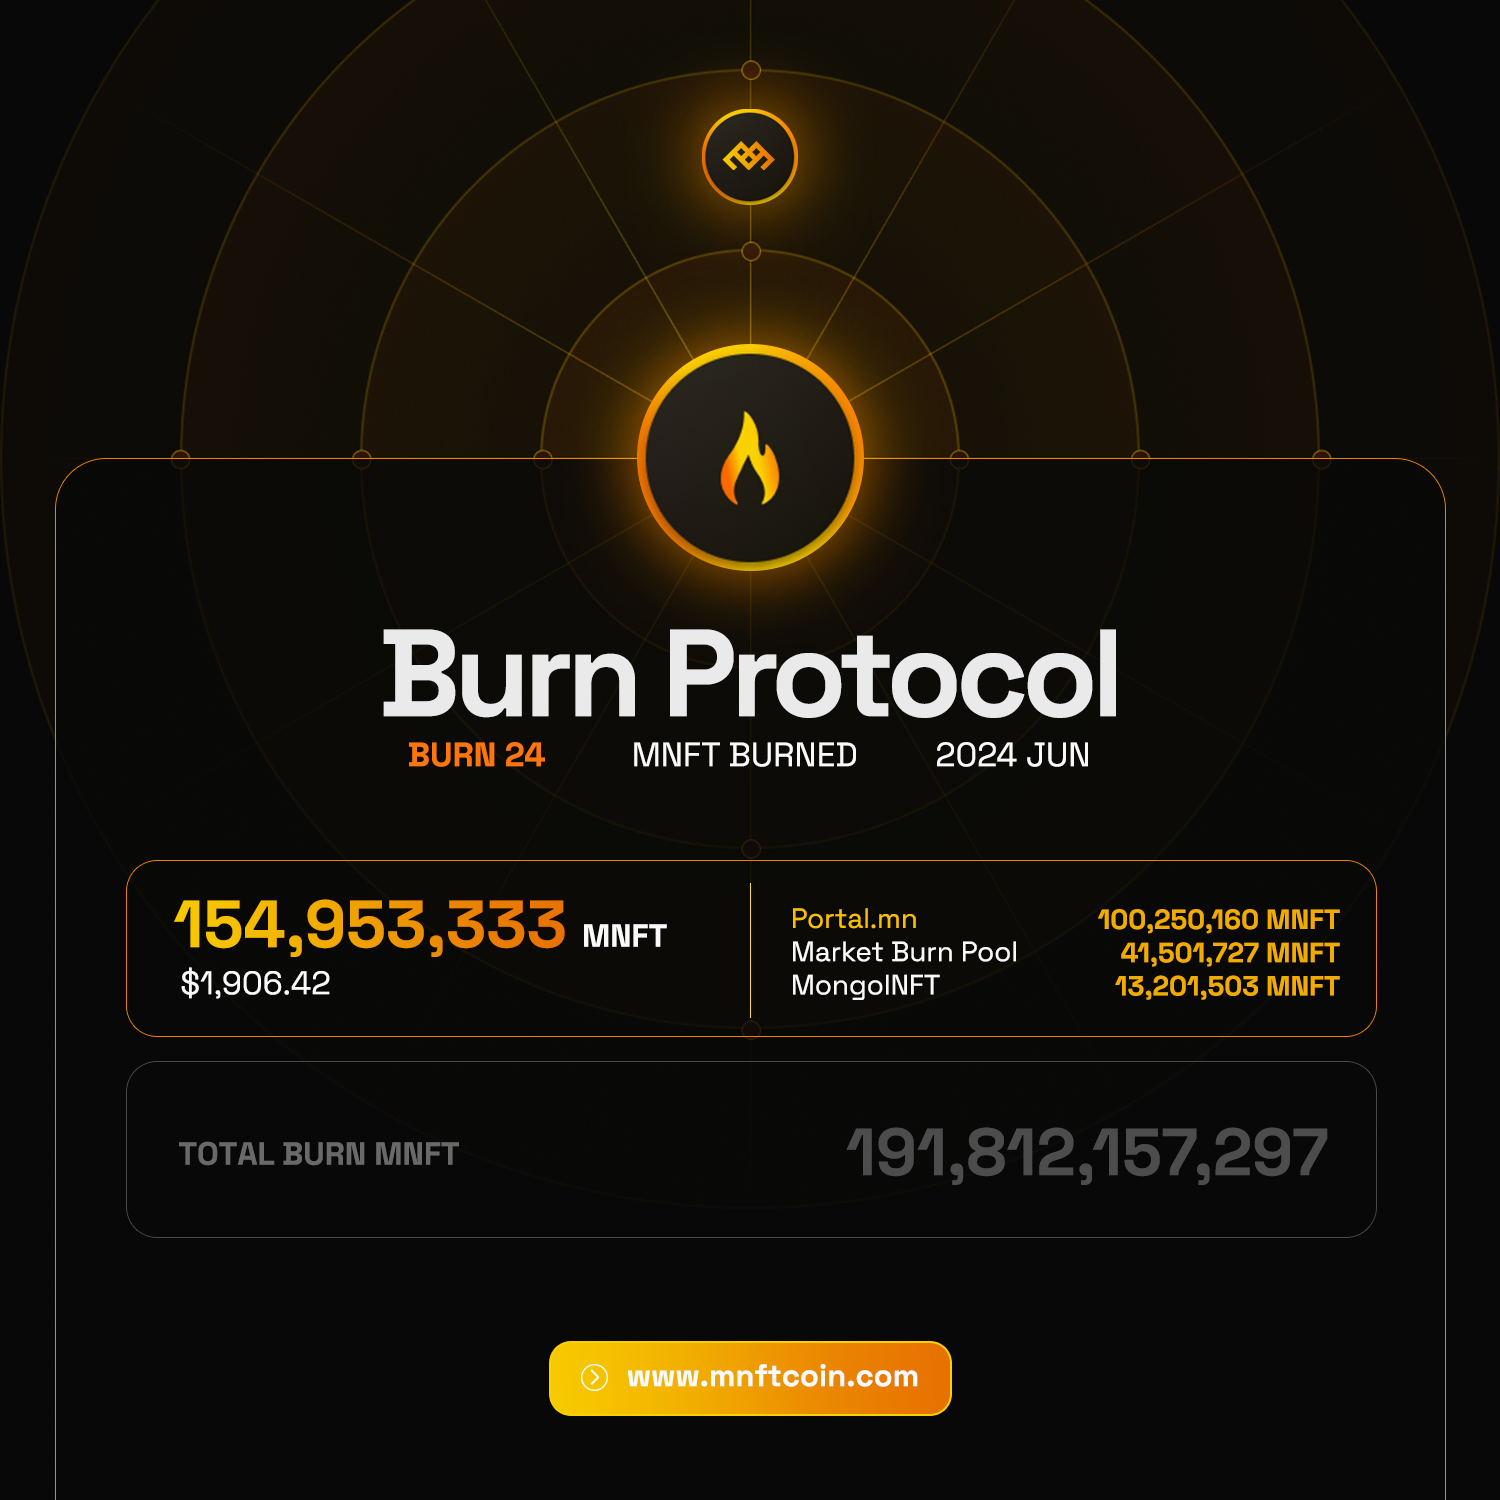 Burn Protocol